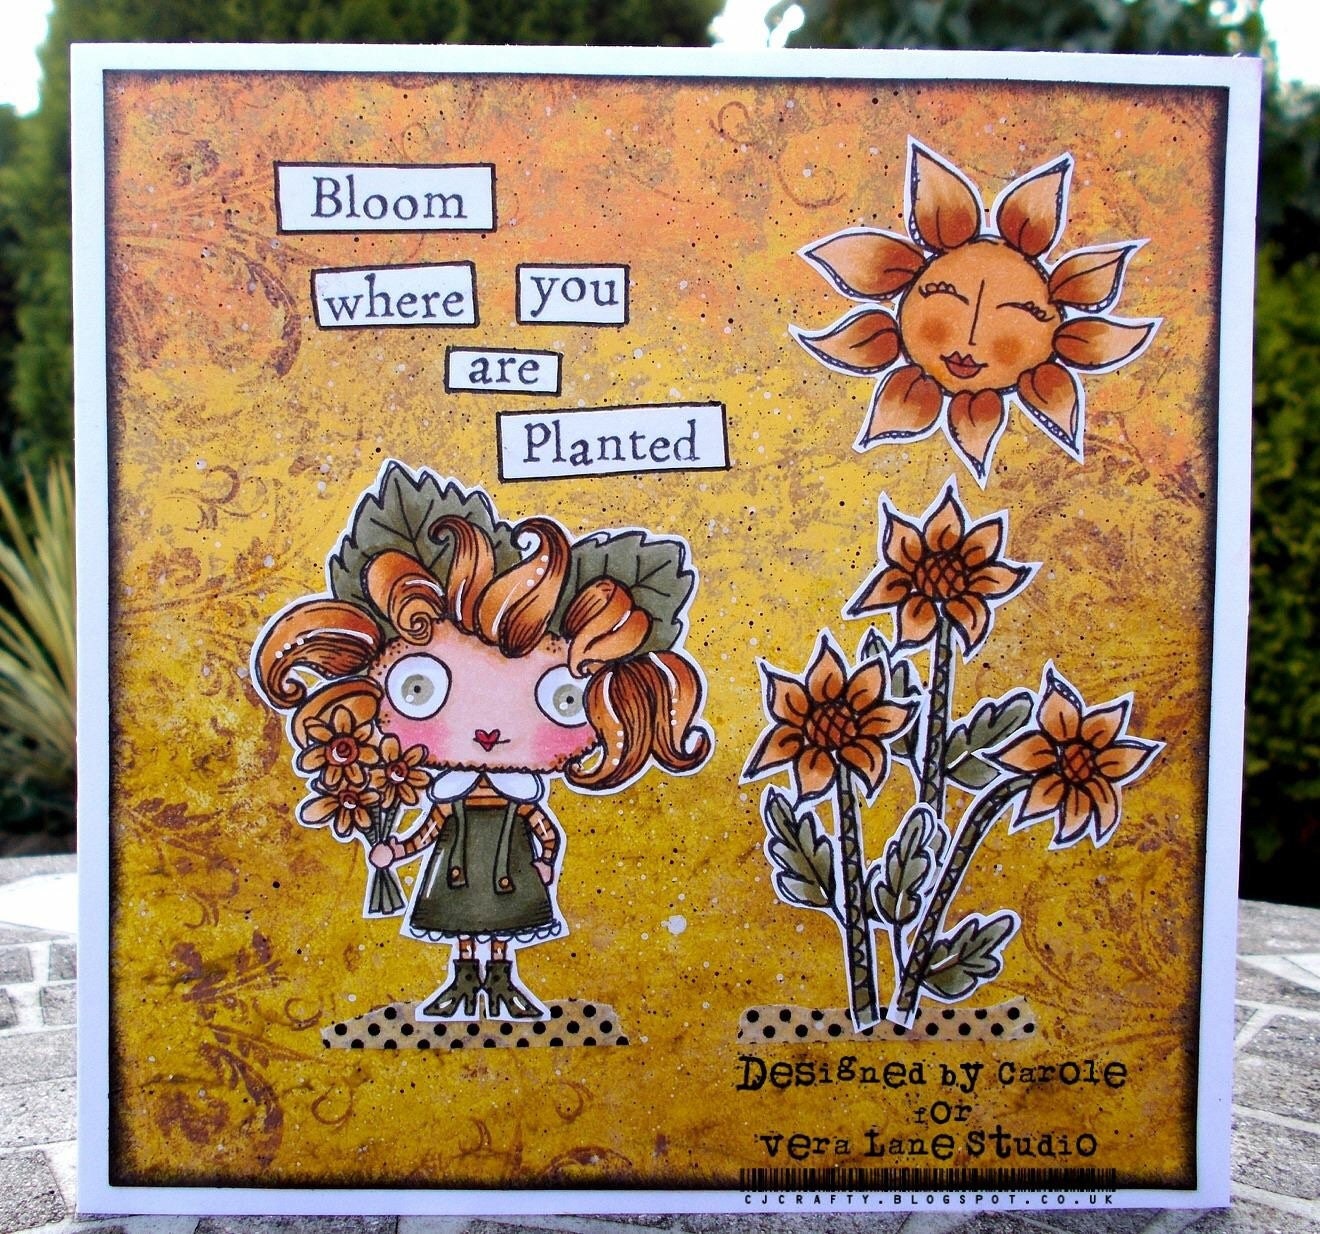 Sunflower - 5 digi stamp bundle